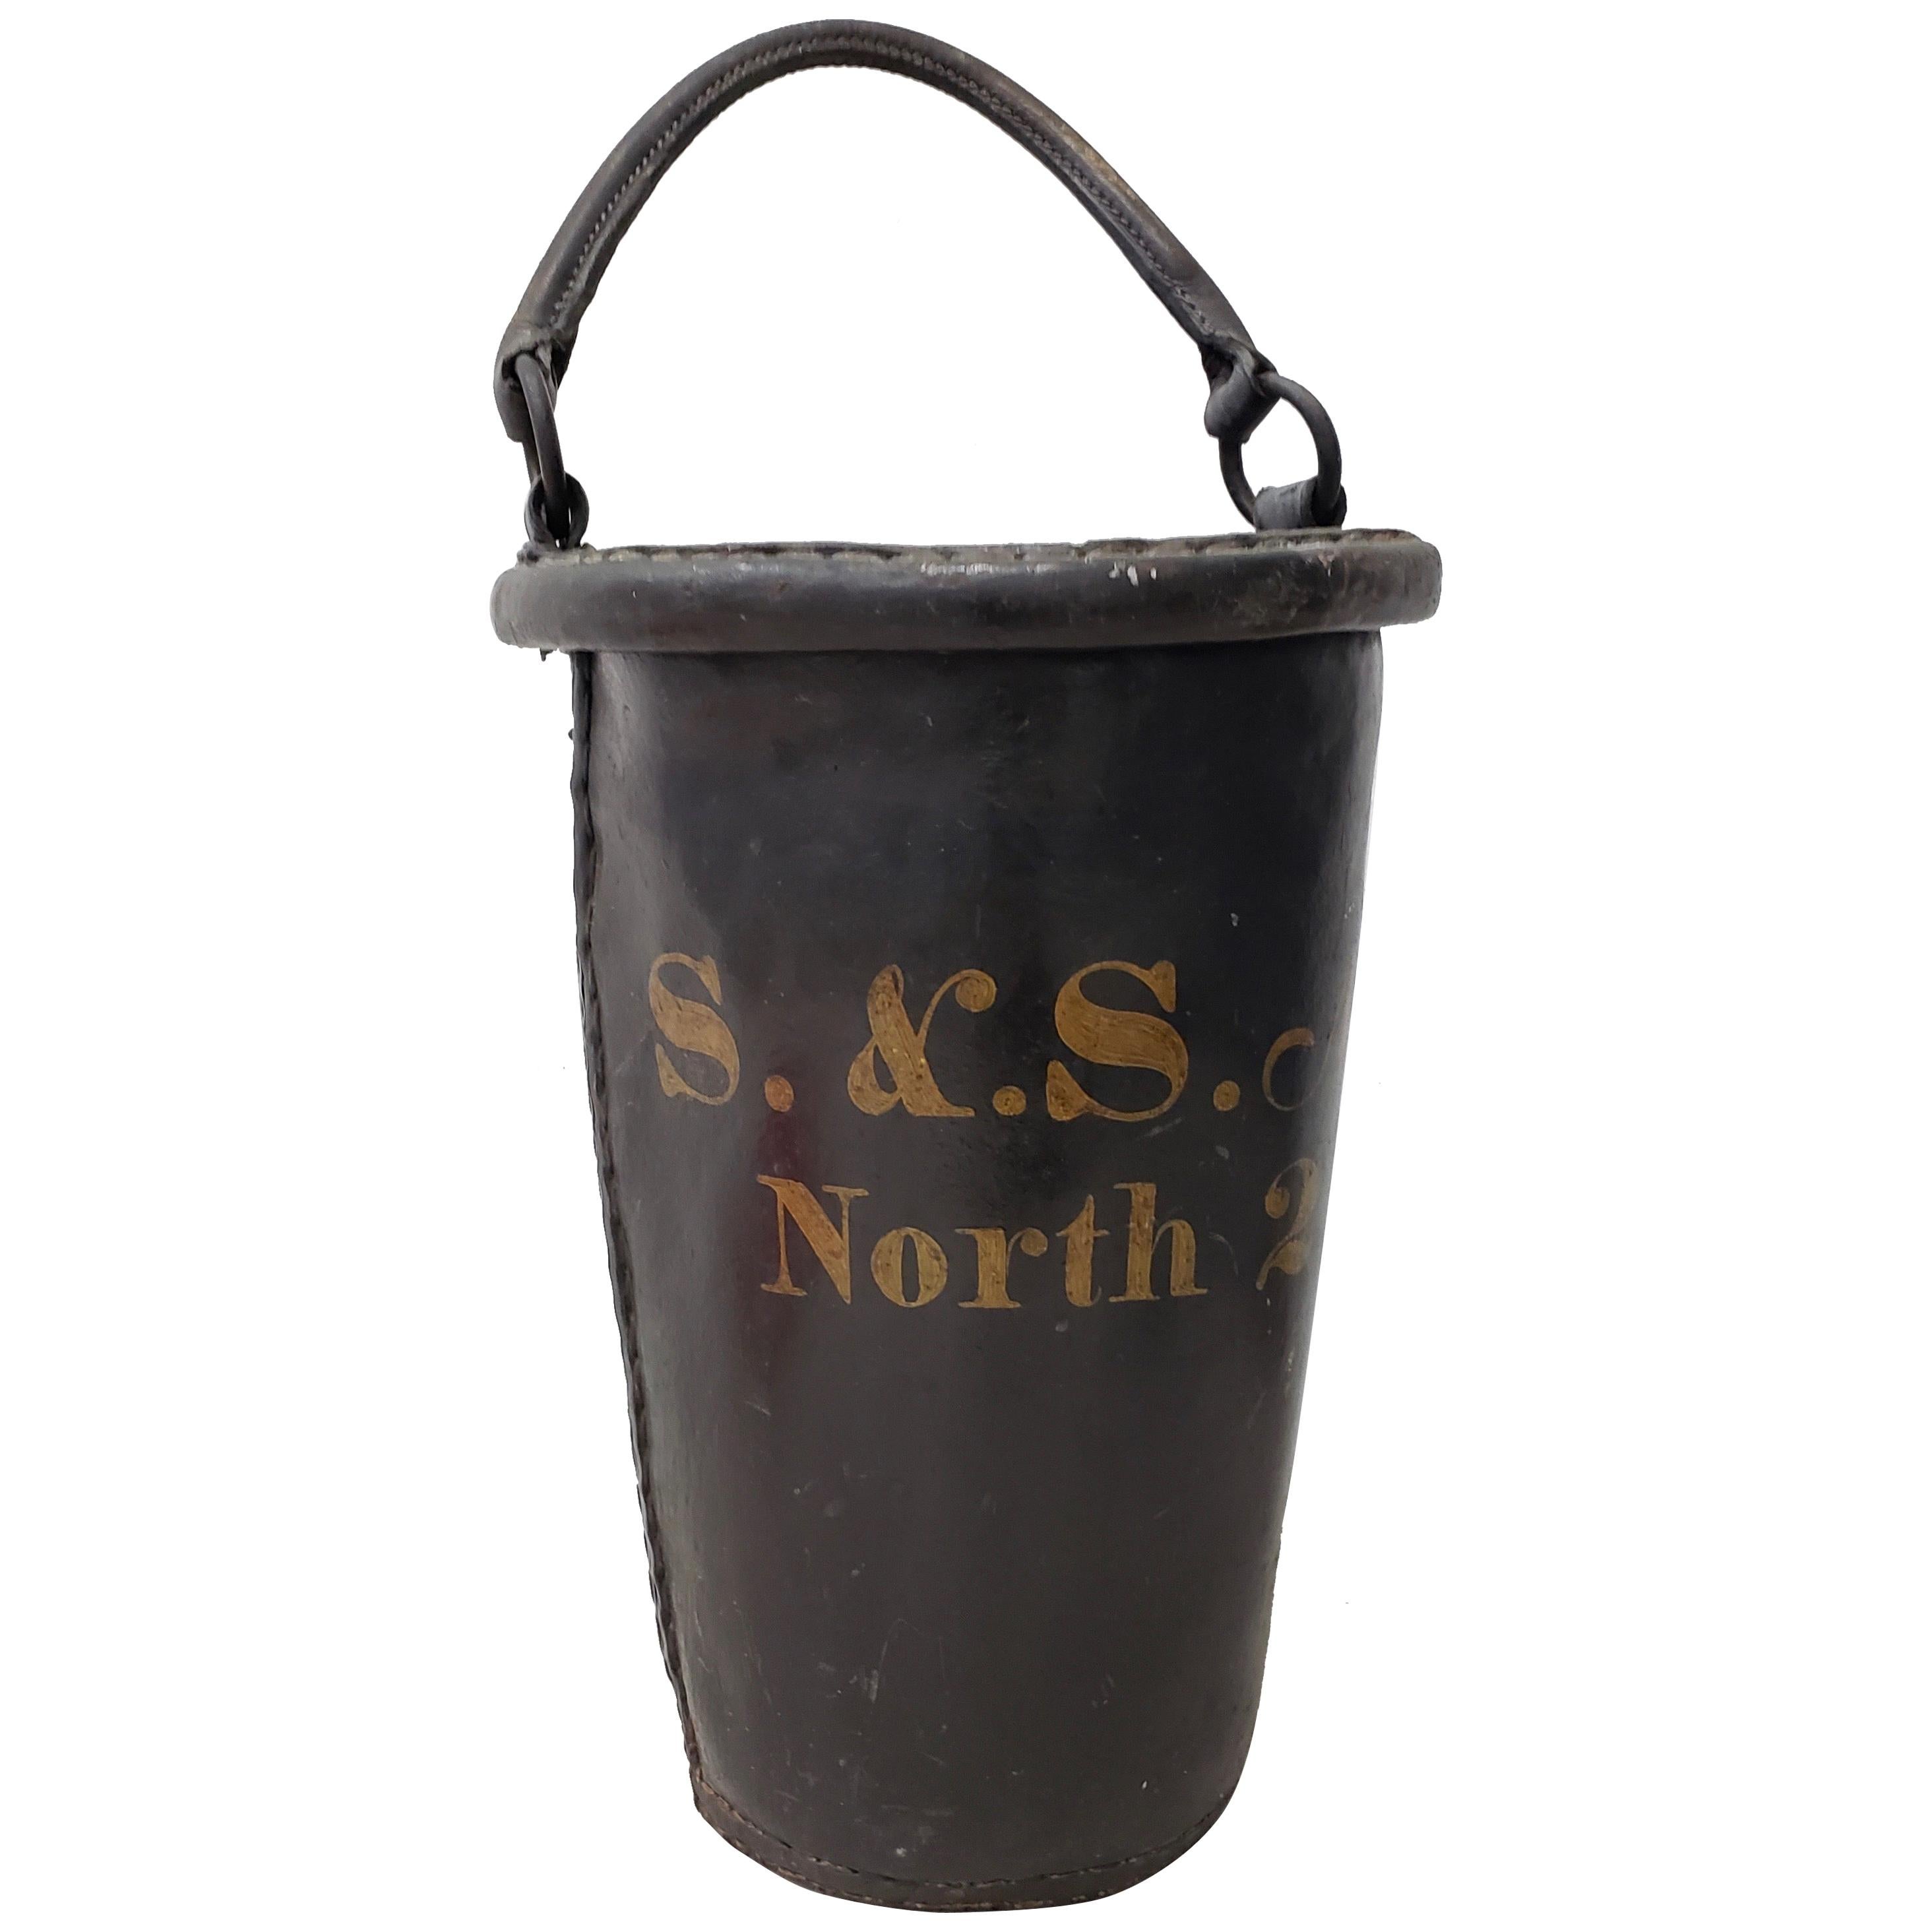 Antique 19th Century English Leather Fire Bucket, circa 1880